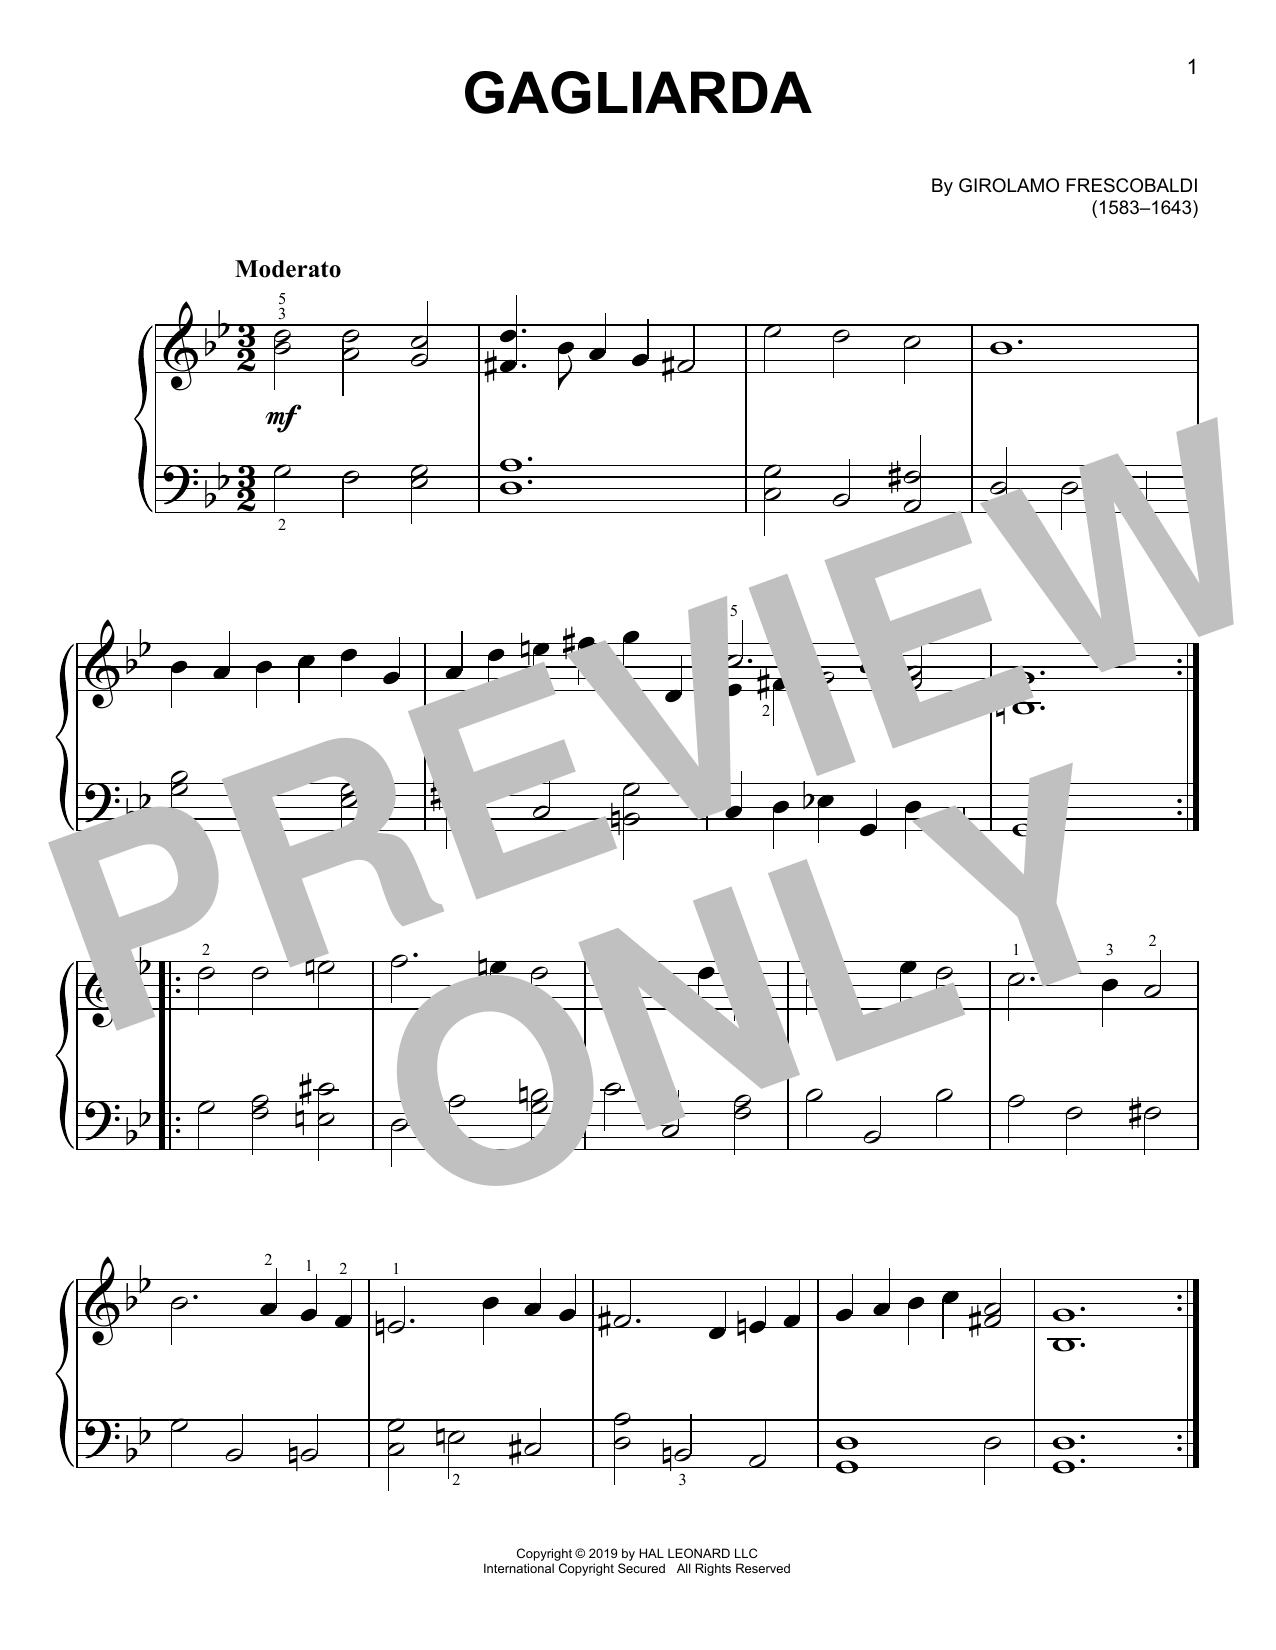 Girolamo Frescobaldi Gagliarda Sheet Music Notes & Chords for Piano Solo - Download or Print PDF